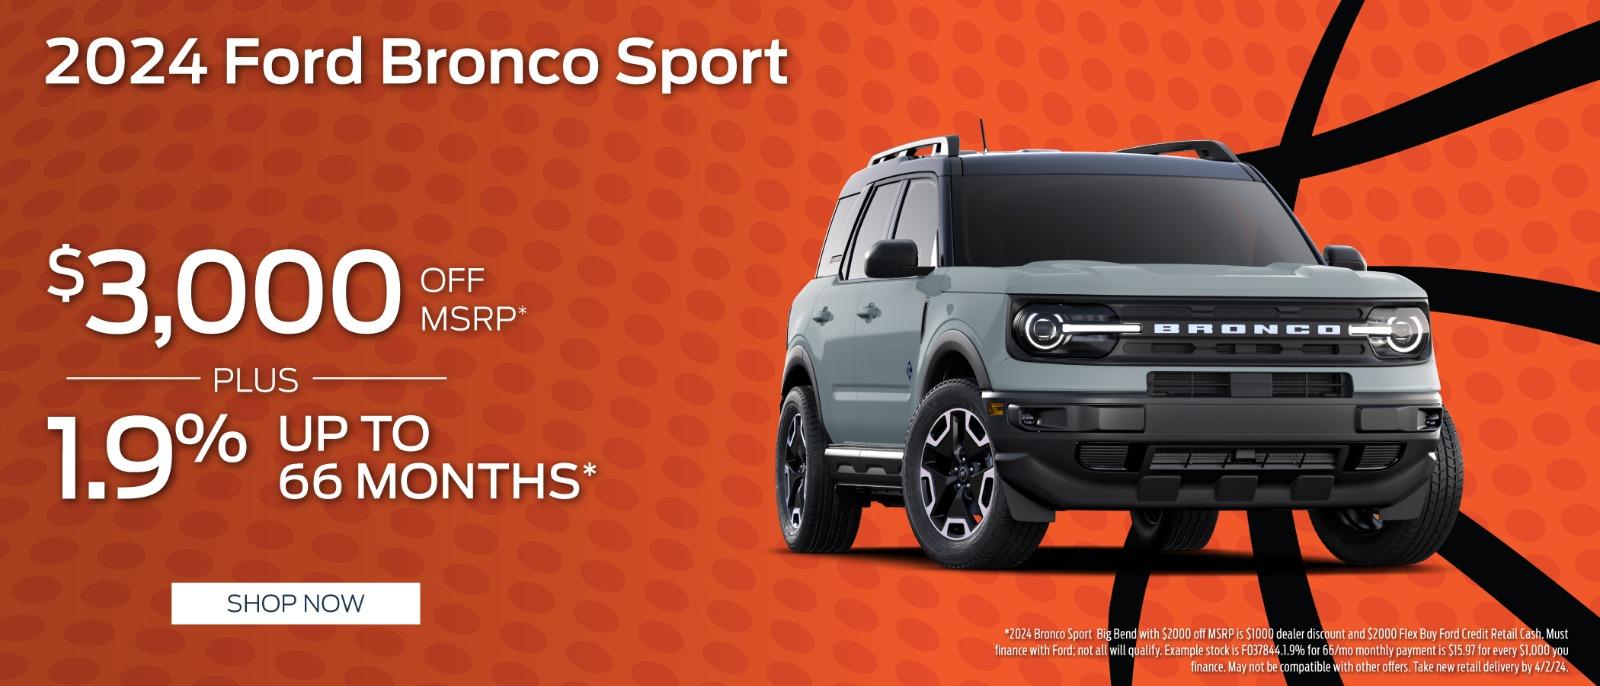 2024 Ford Bronco Sport $3,000 flex buy bonus cash plus 1.9% up to 66 months